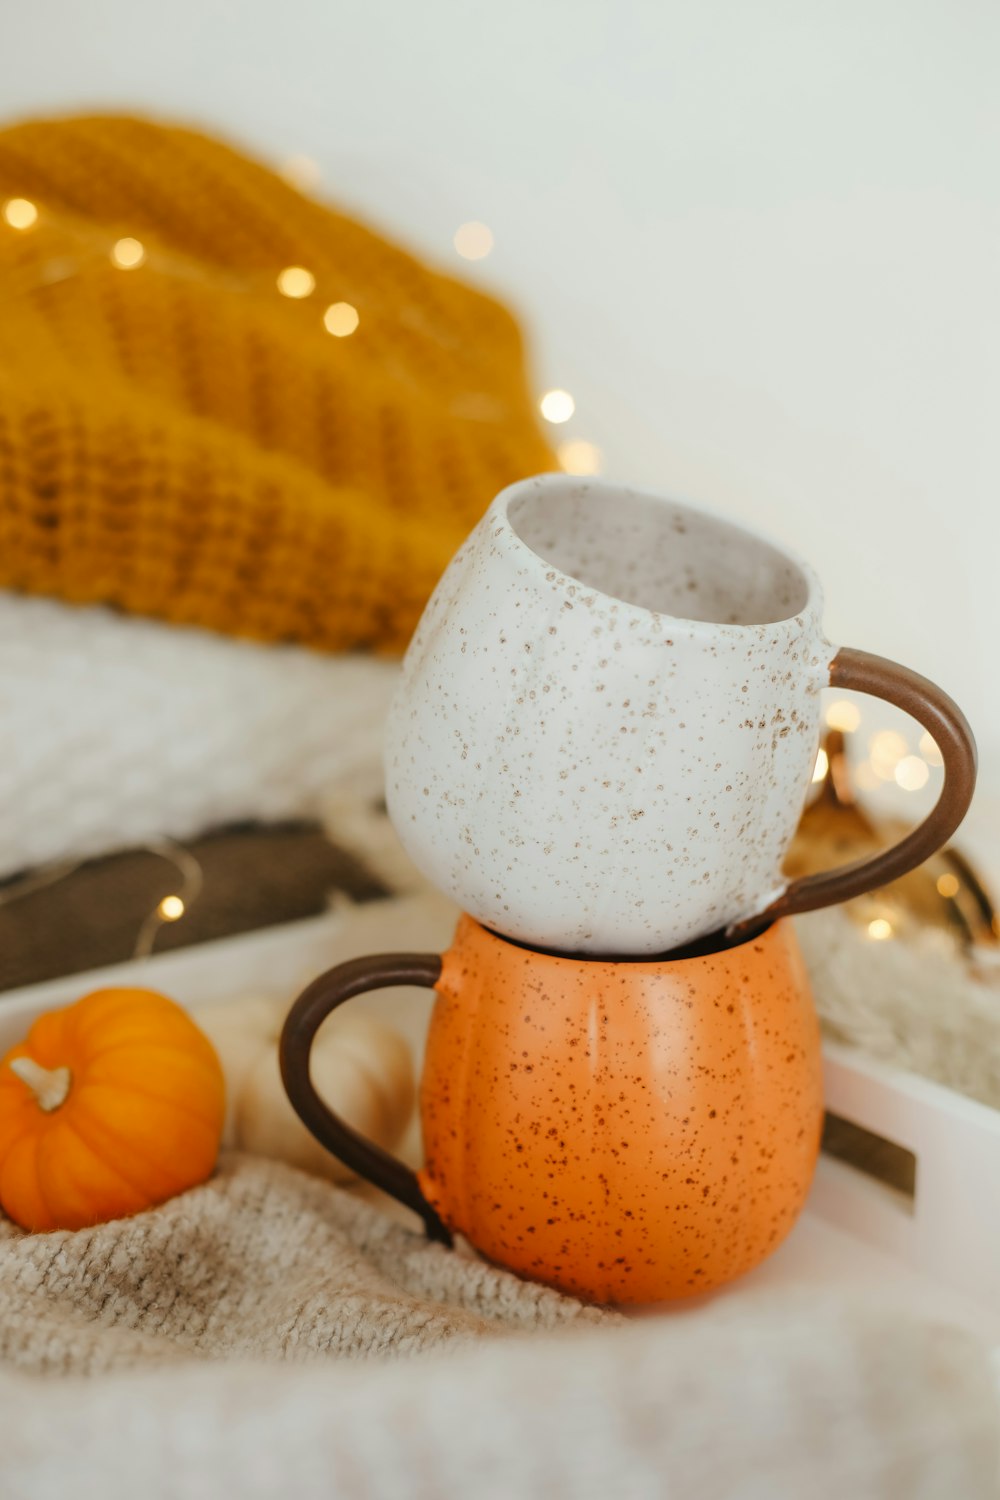 a mug of tea next to a pumpkin and a slice of orange